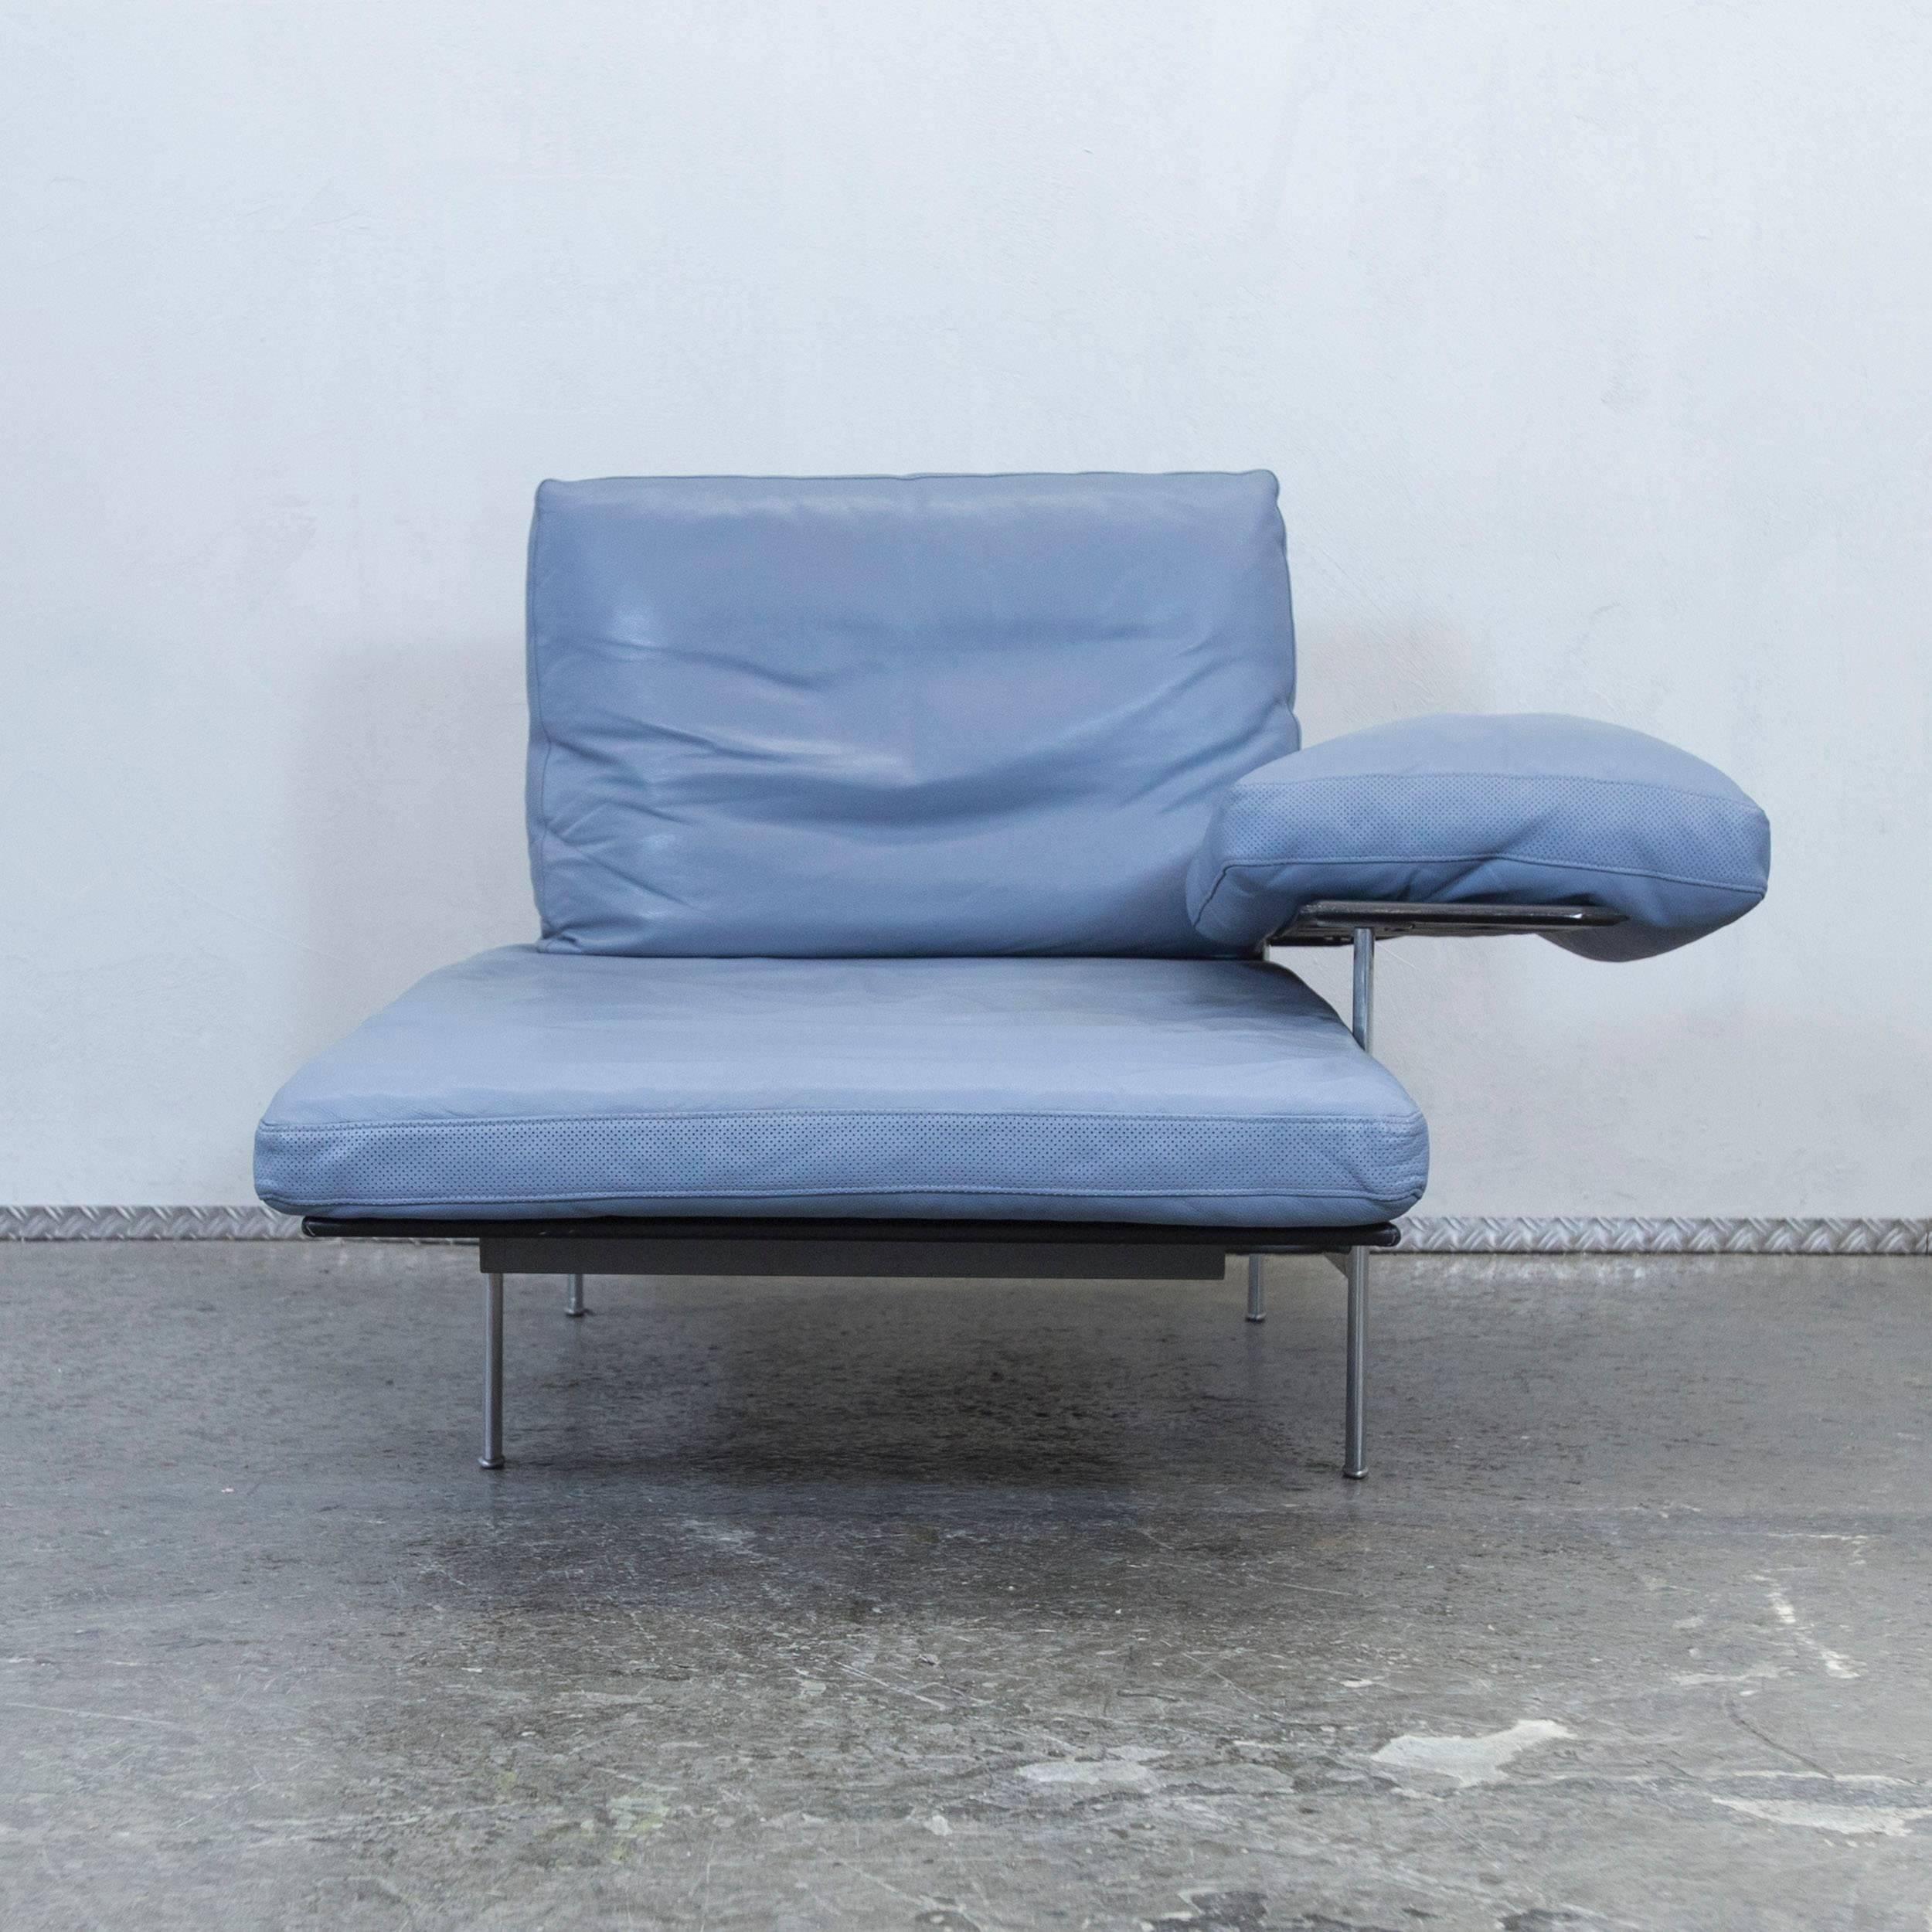 Blue colored original B&B Italia designer recamier in a minimalistic and modern design, made for pure comfort.